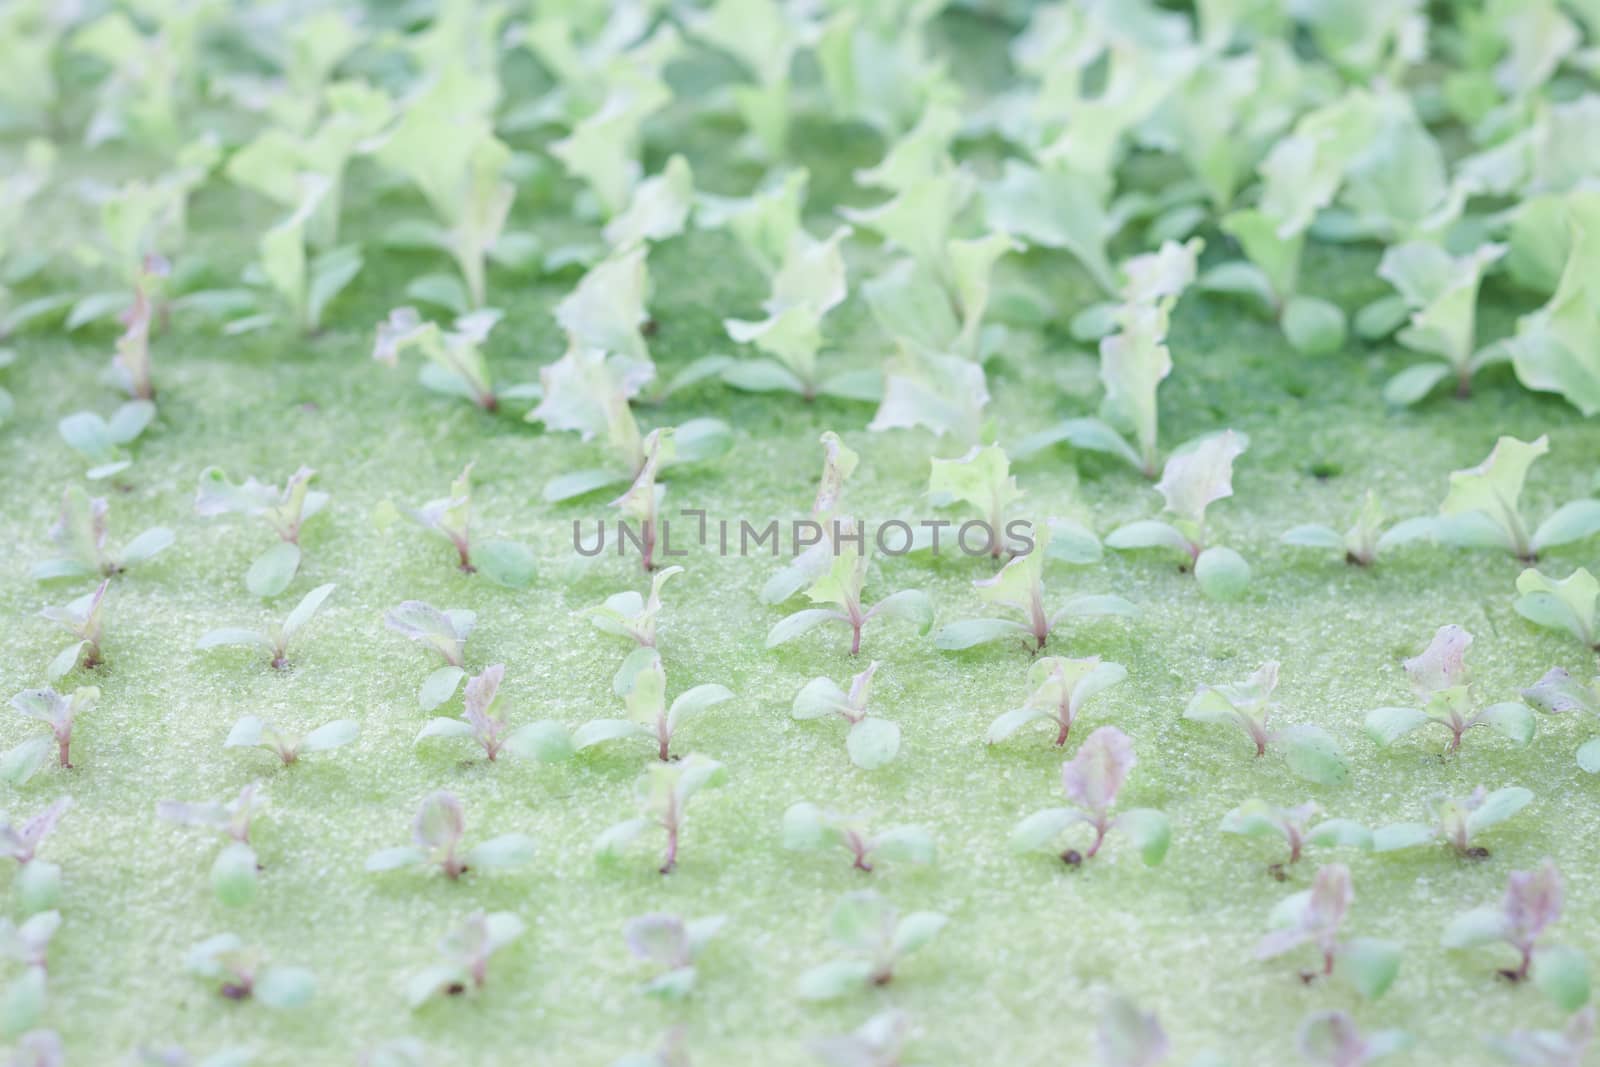 Hydrophonic plantation of vegetable salad, stock photo